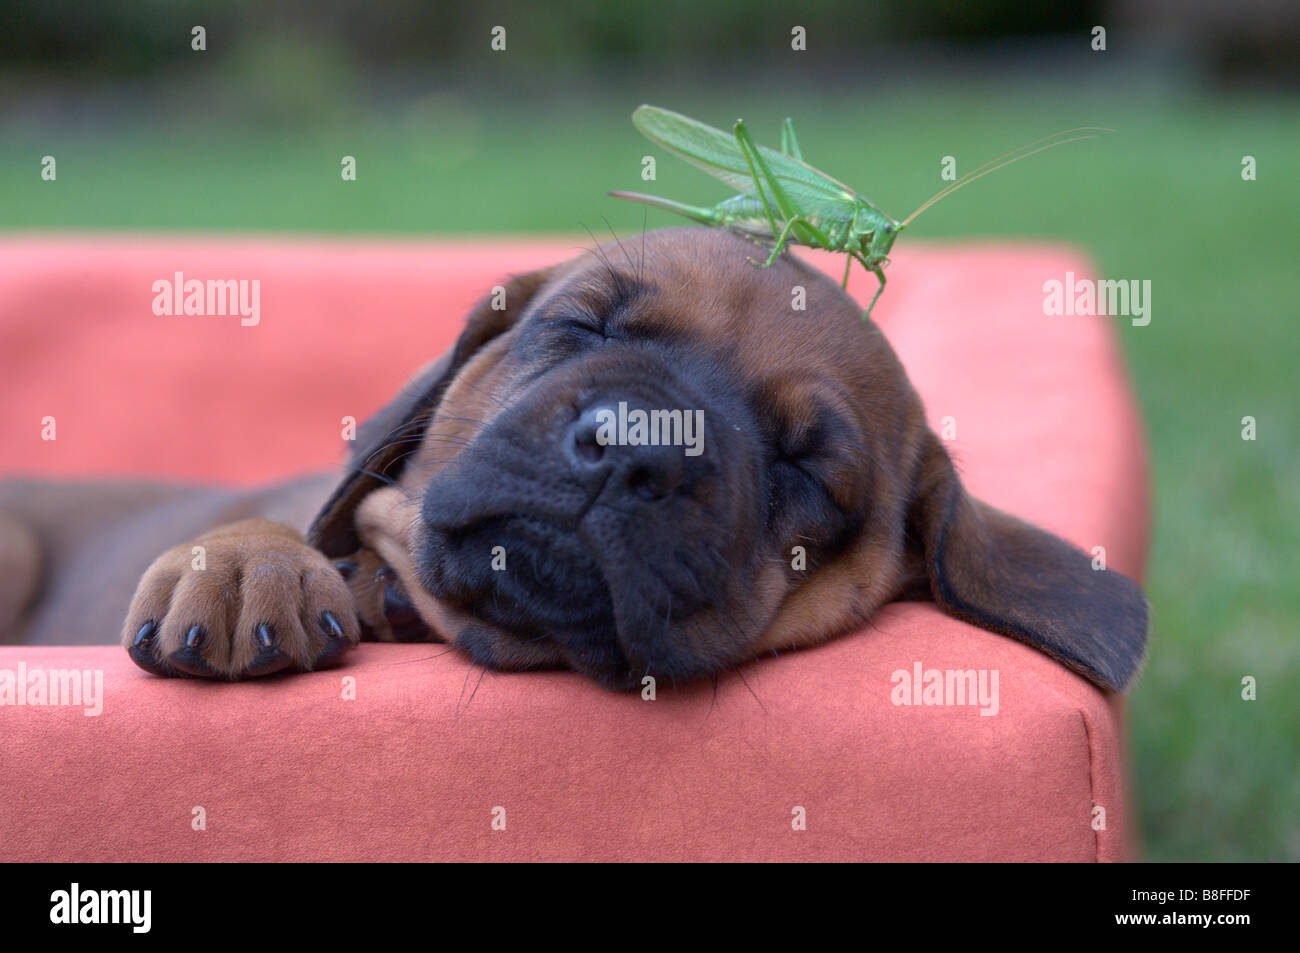 Rhodesian Ridgeback (Canis lupus familiaris). Sleeping puppy with grasshopper on its head Stock Photo